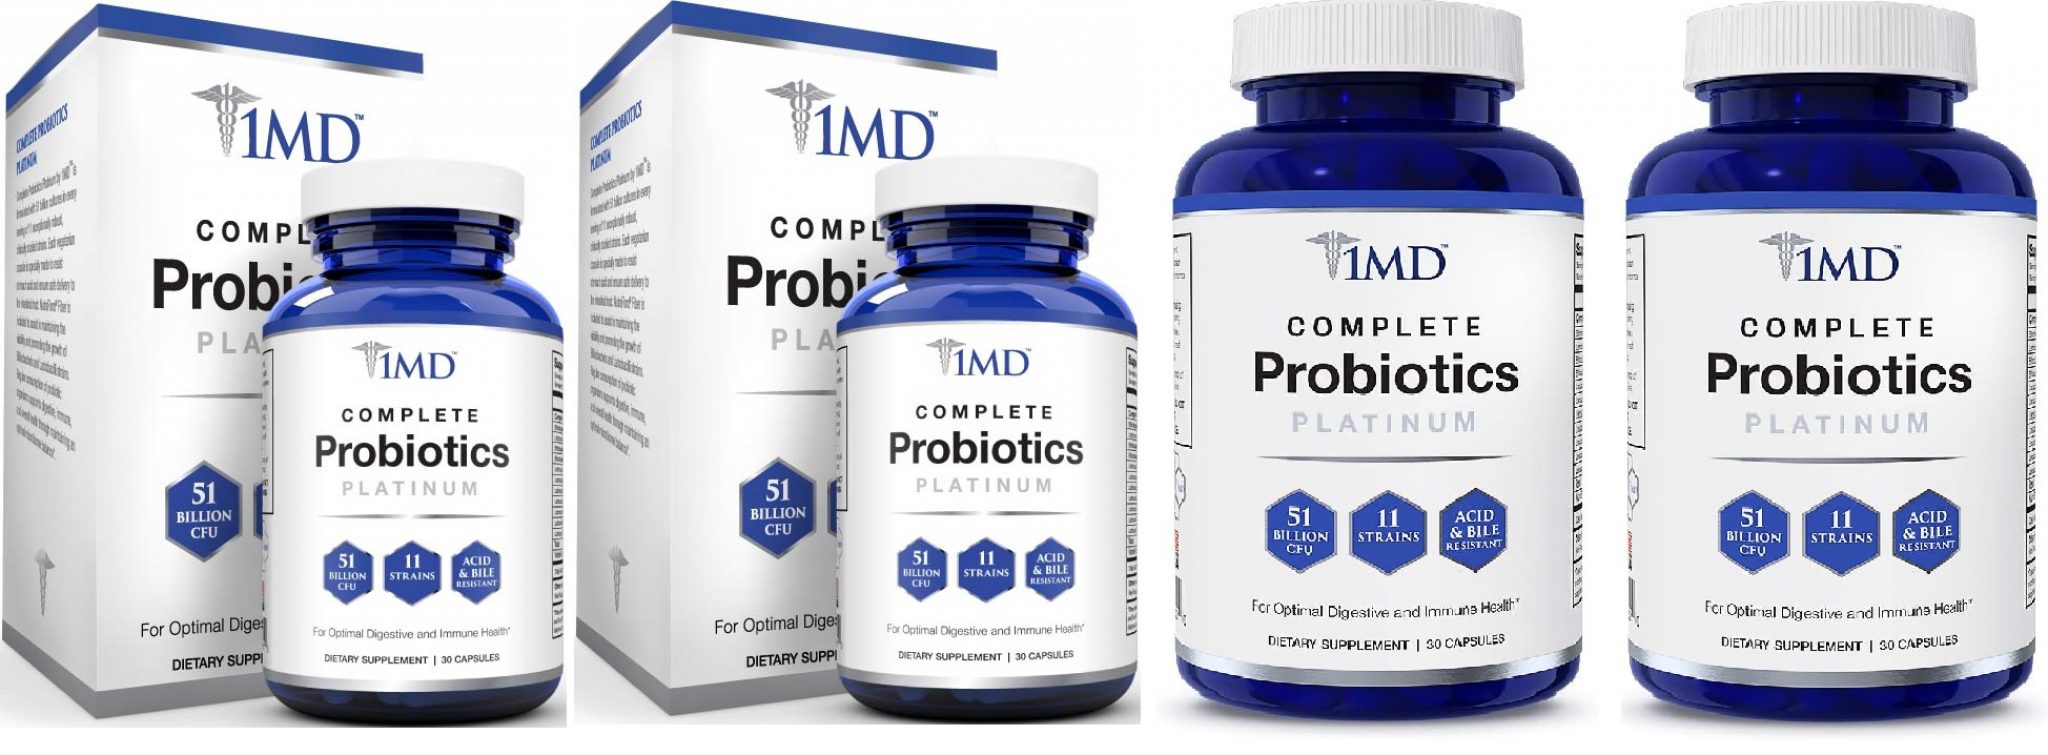 1md Complete Probiotics Platinum Review 2020 1md Complete Probiotic.